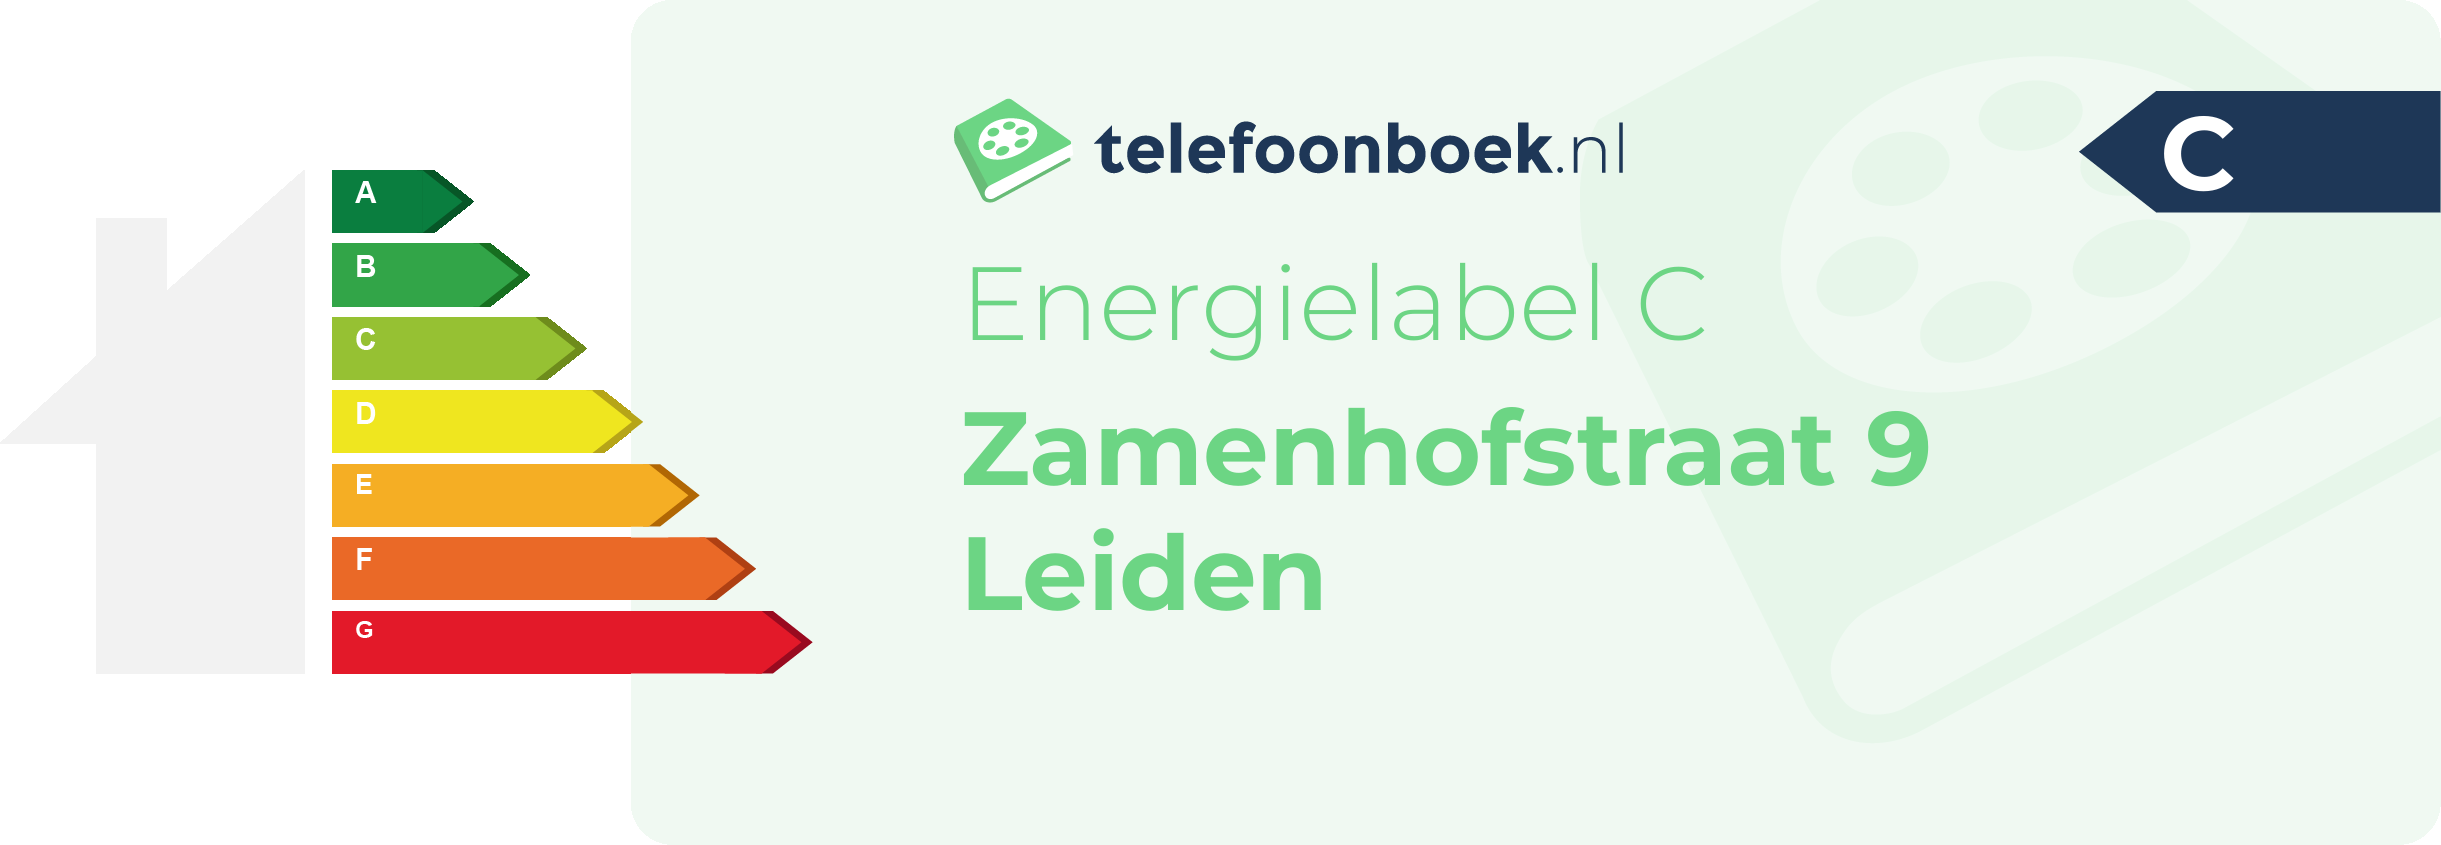 Energielabel Zamenhofstraat 9 Leiden